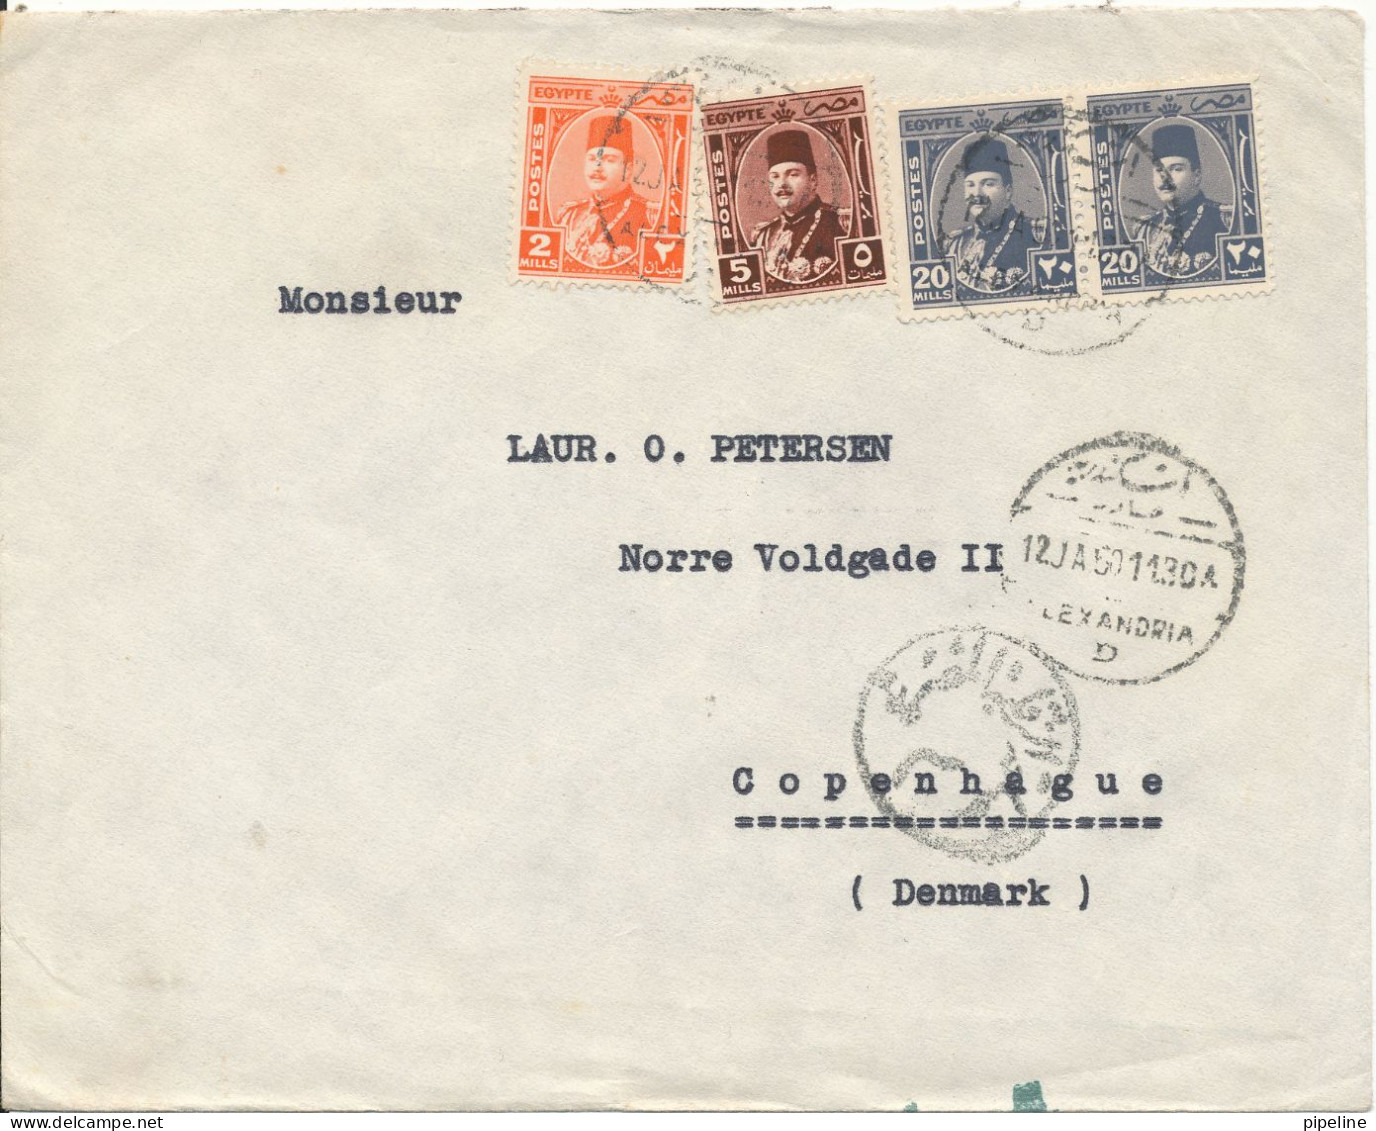 Egypt Cover Sent To Denmark Alexandria 12-1-1950 - Covers & Documents